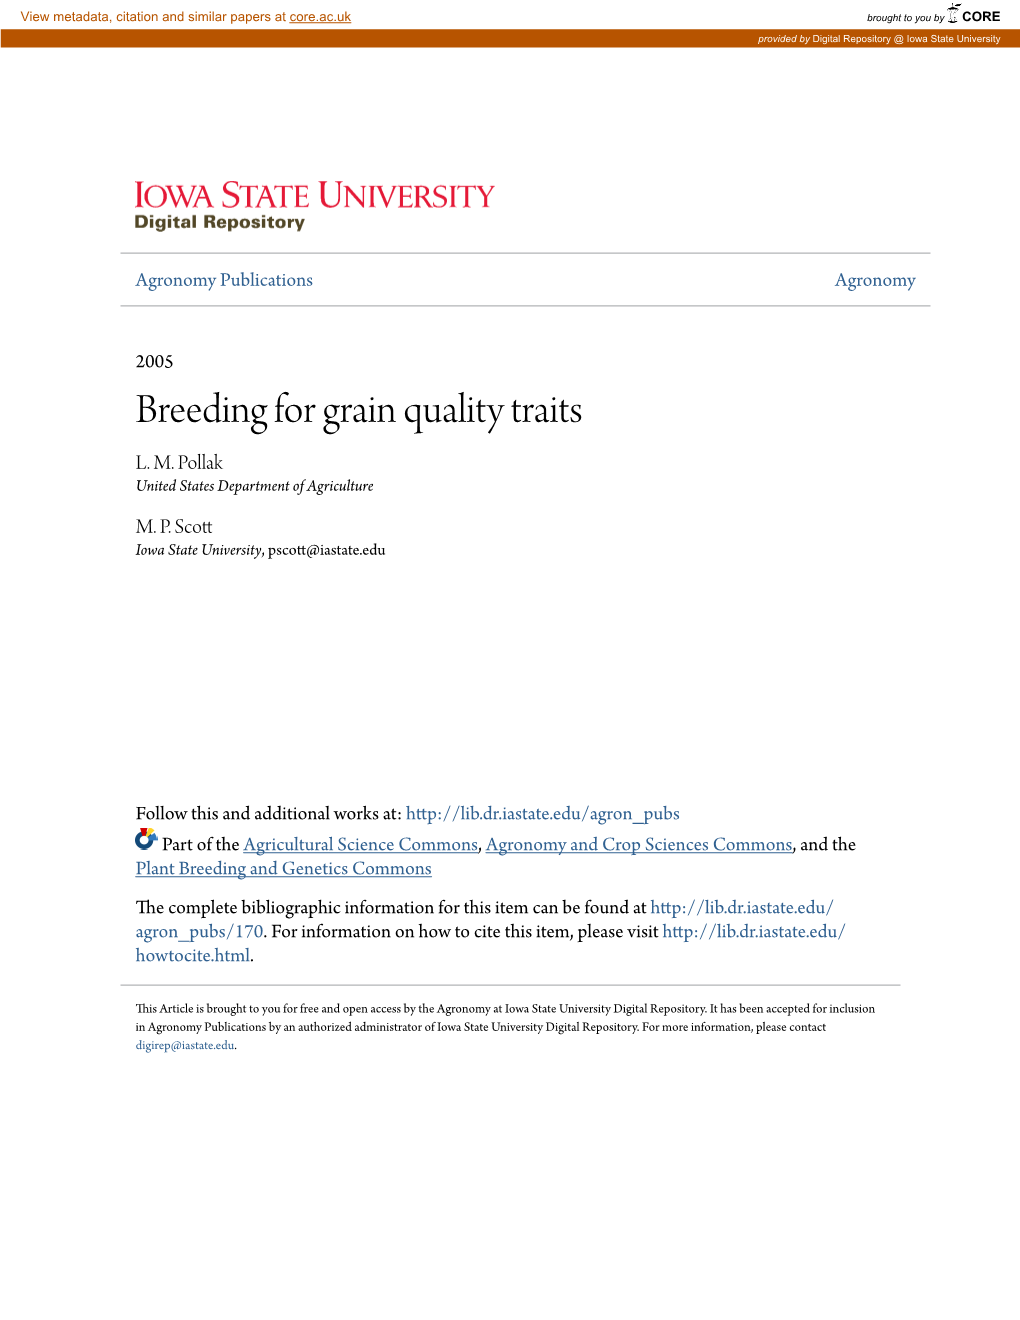 Breeding for Grain Quality Traits L